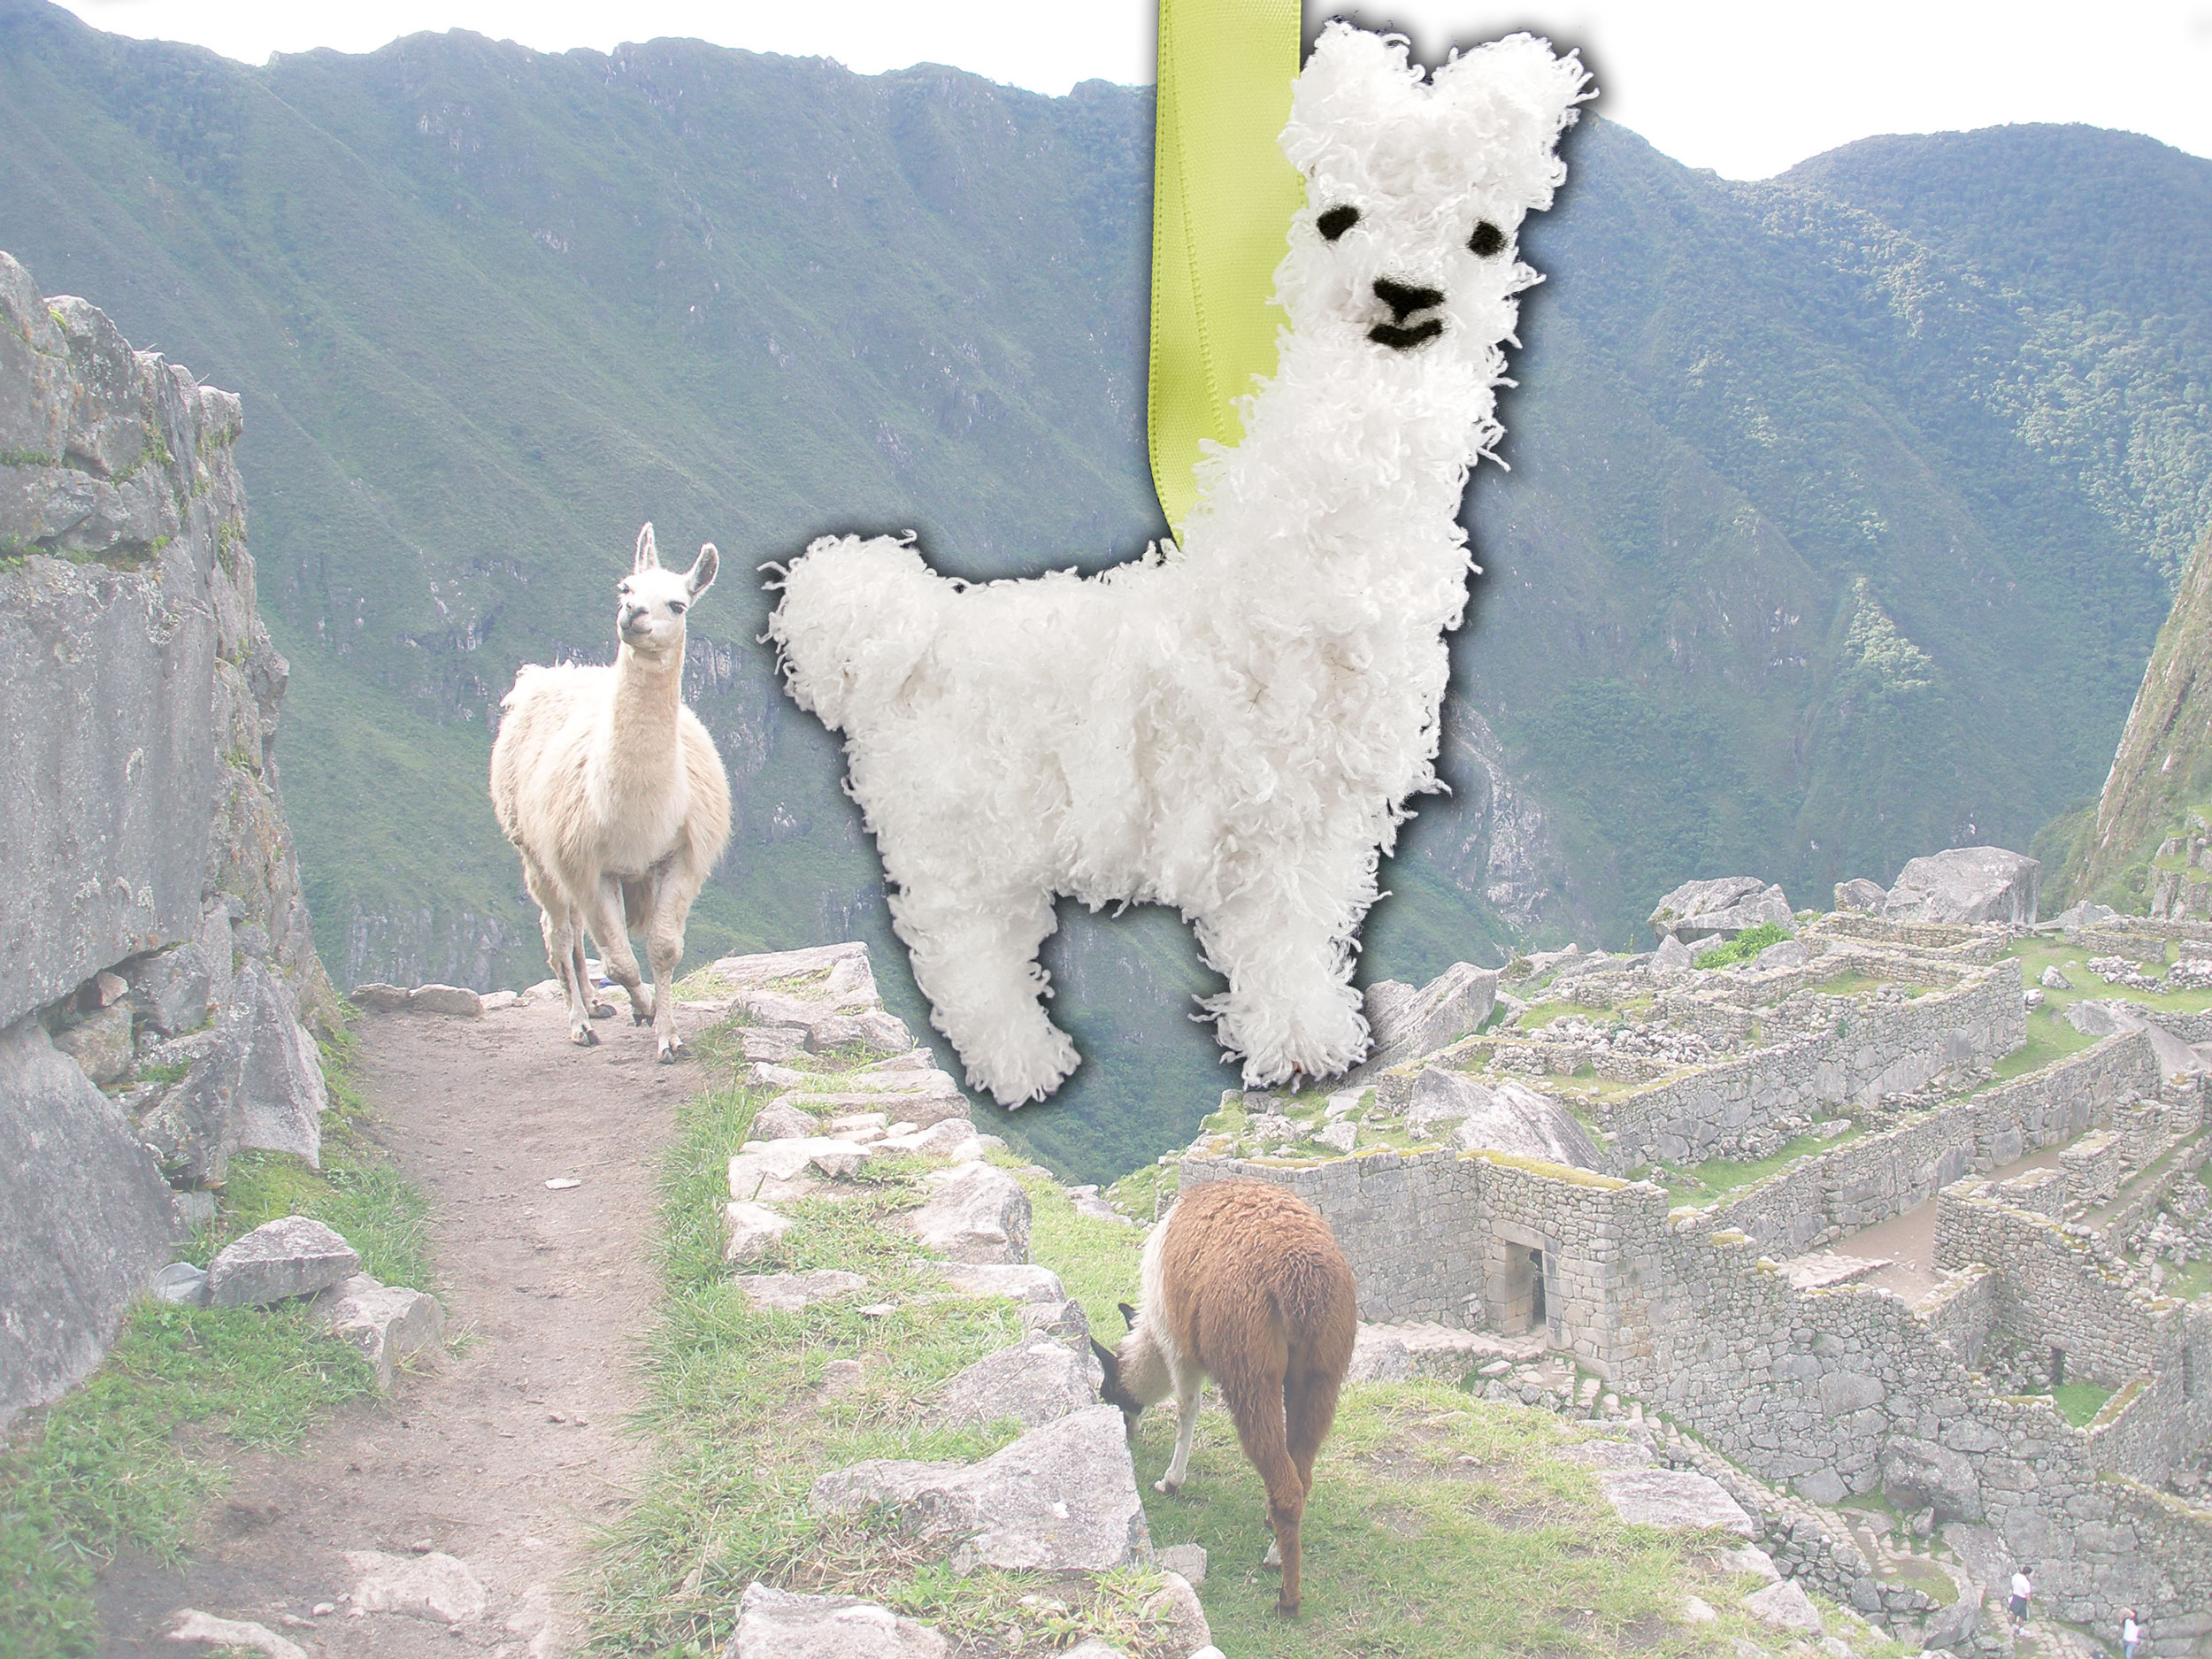 A DIY llama ornament along side a real llama - perfect for fans who love this woolly animal! | OrnamentShop.com